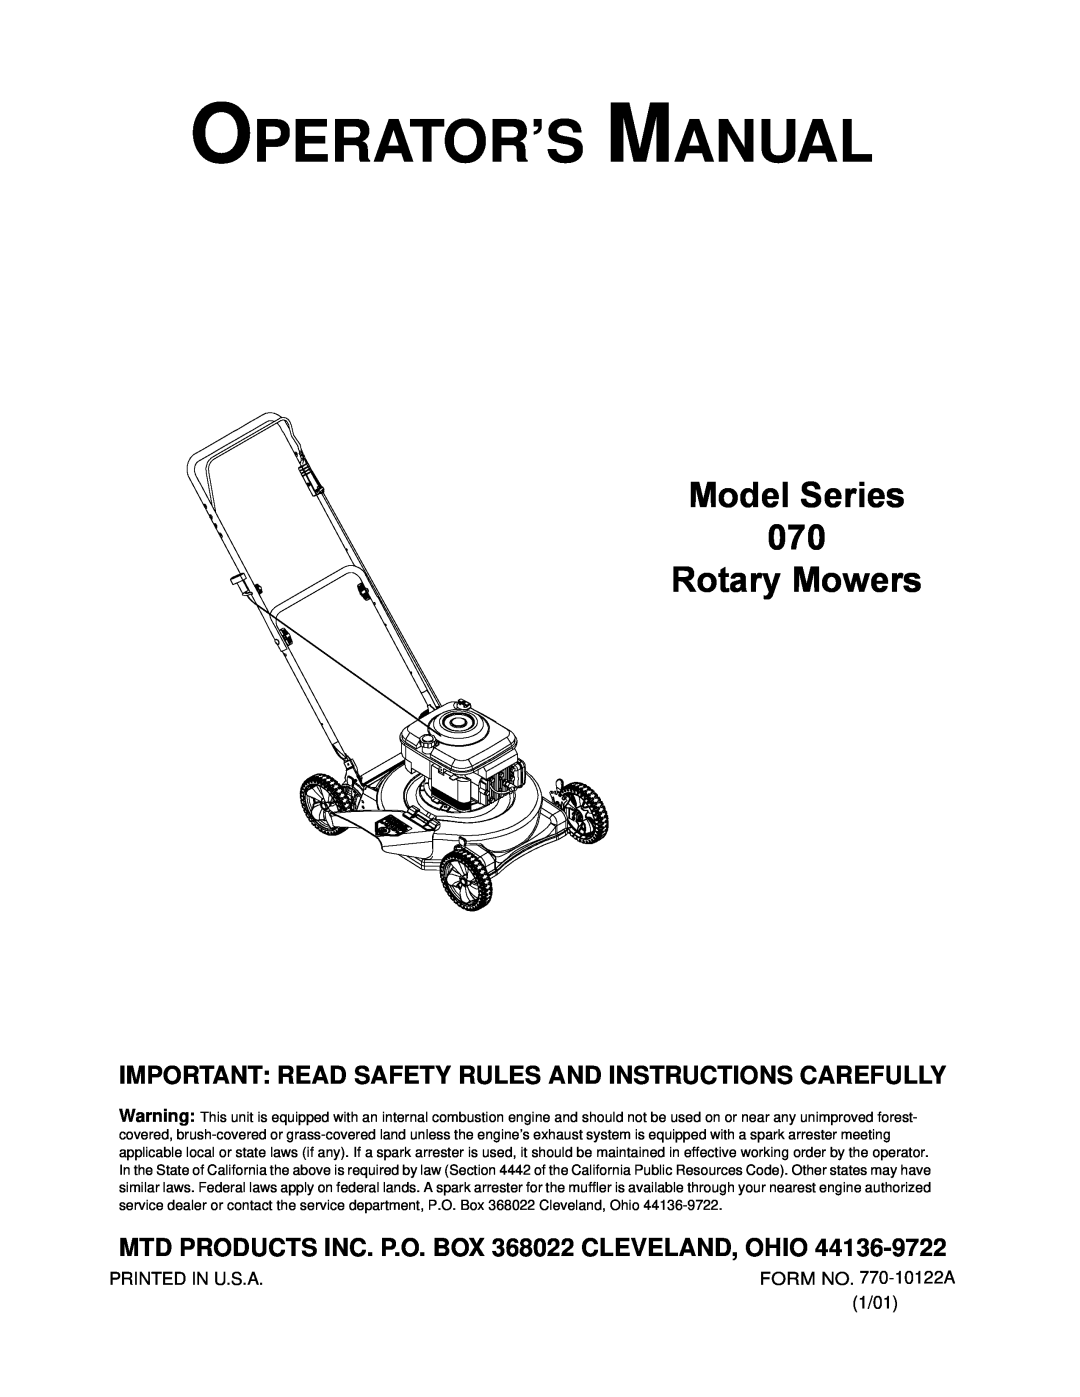 MTD manual MTD PRODUCTS INC. P.O. BOX 368022 CLEVELAND, OHIO, Operator’S Manual, Model Series 070 Rotary Mowers 